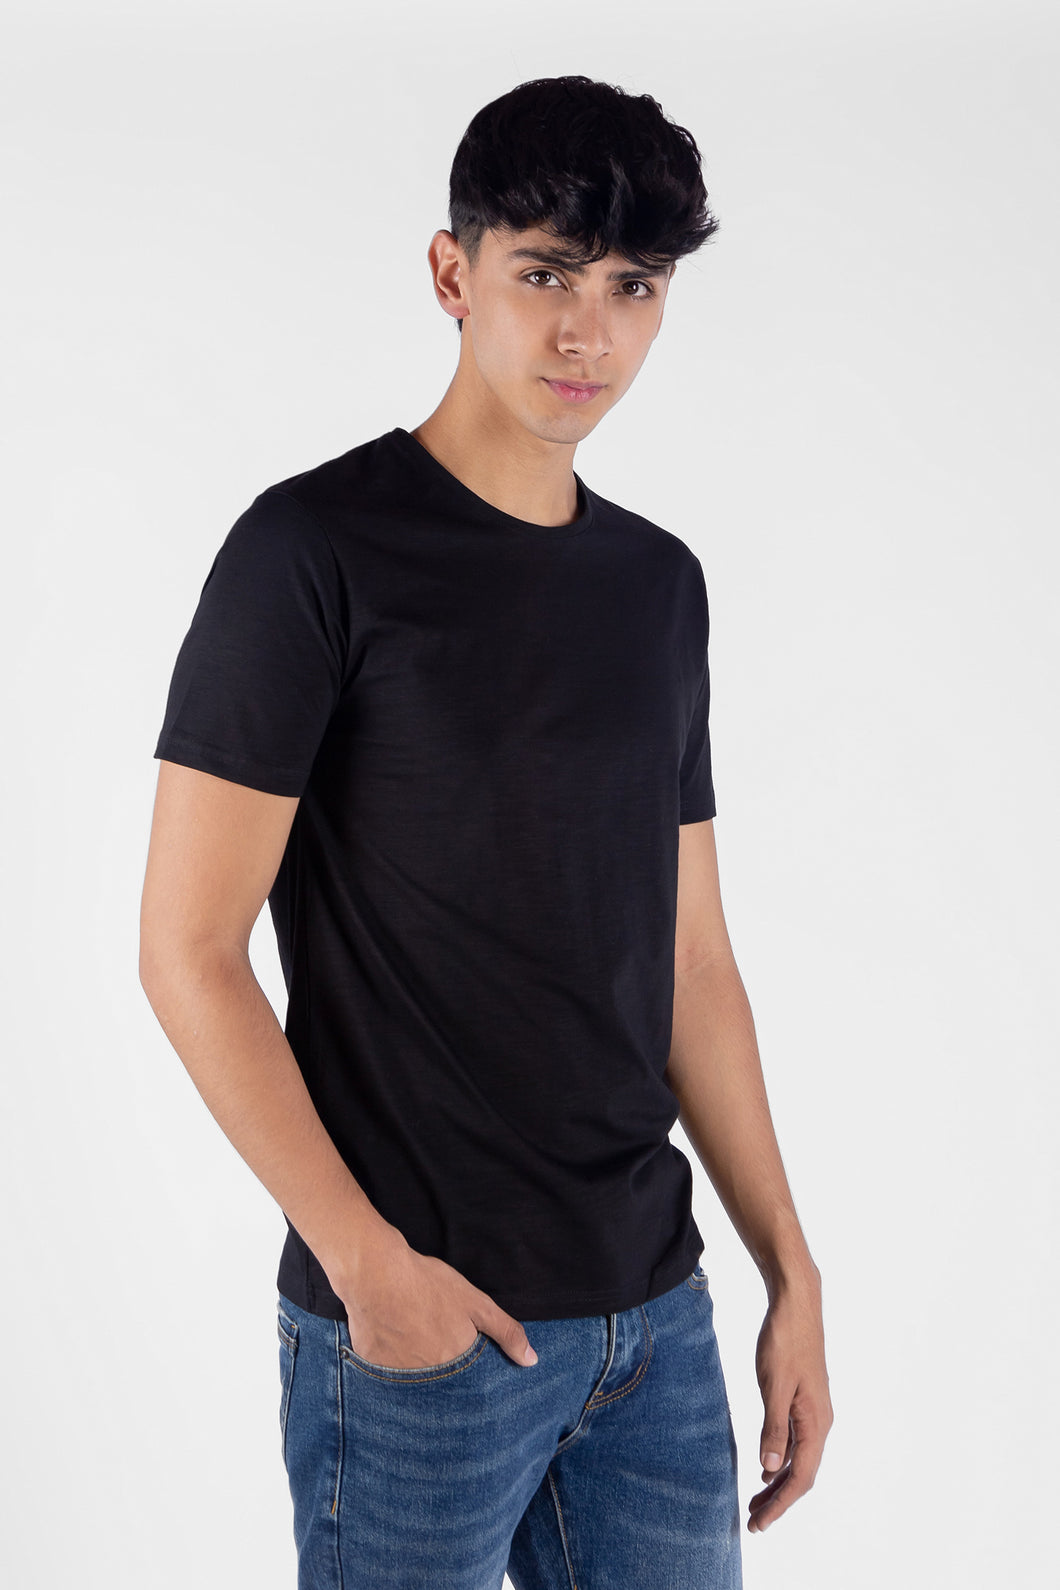 Camiseta Básica Color Negro Para Hombre